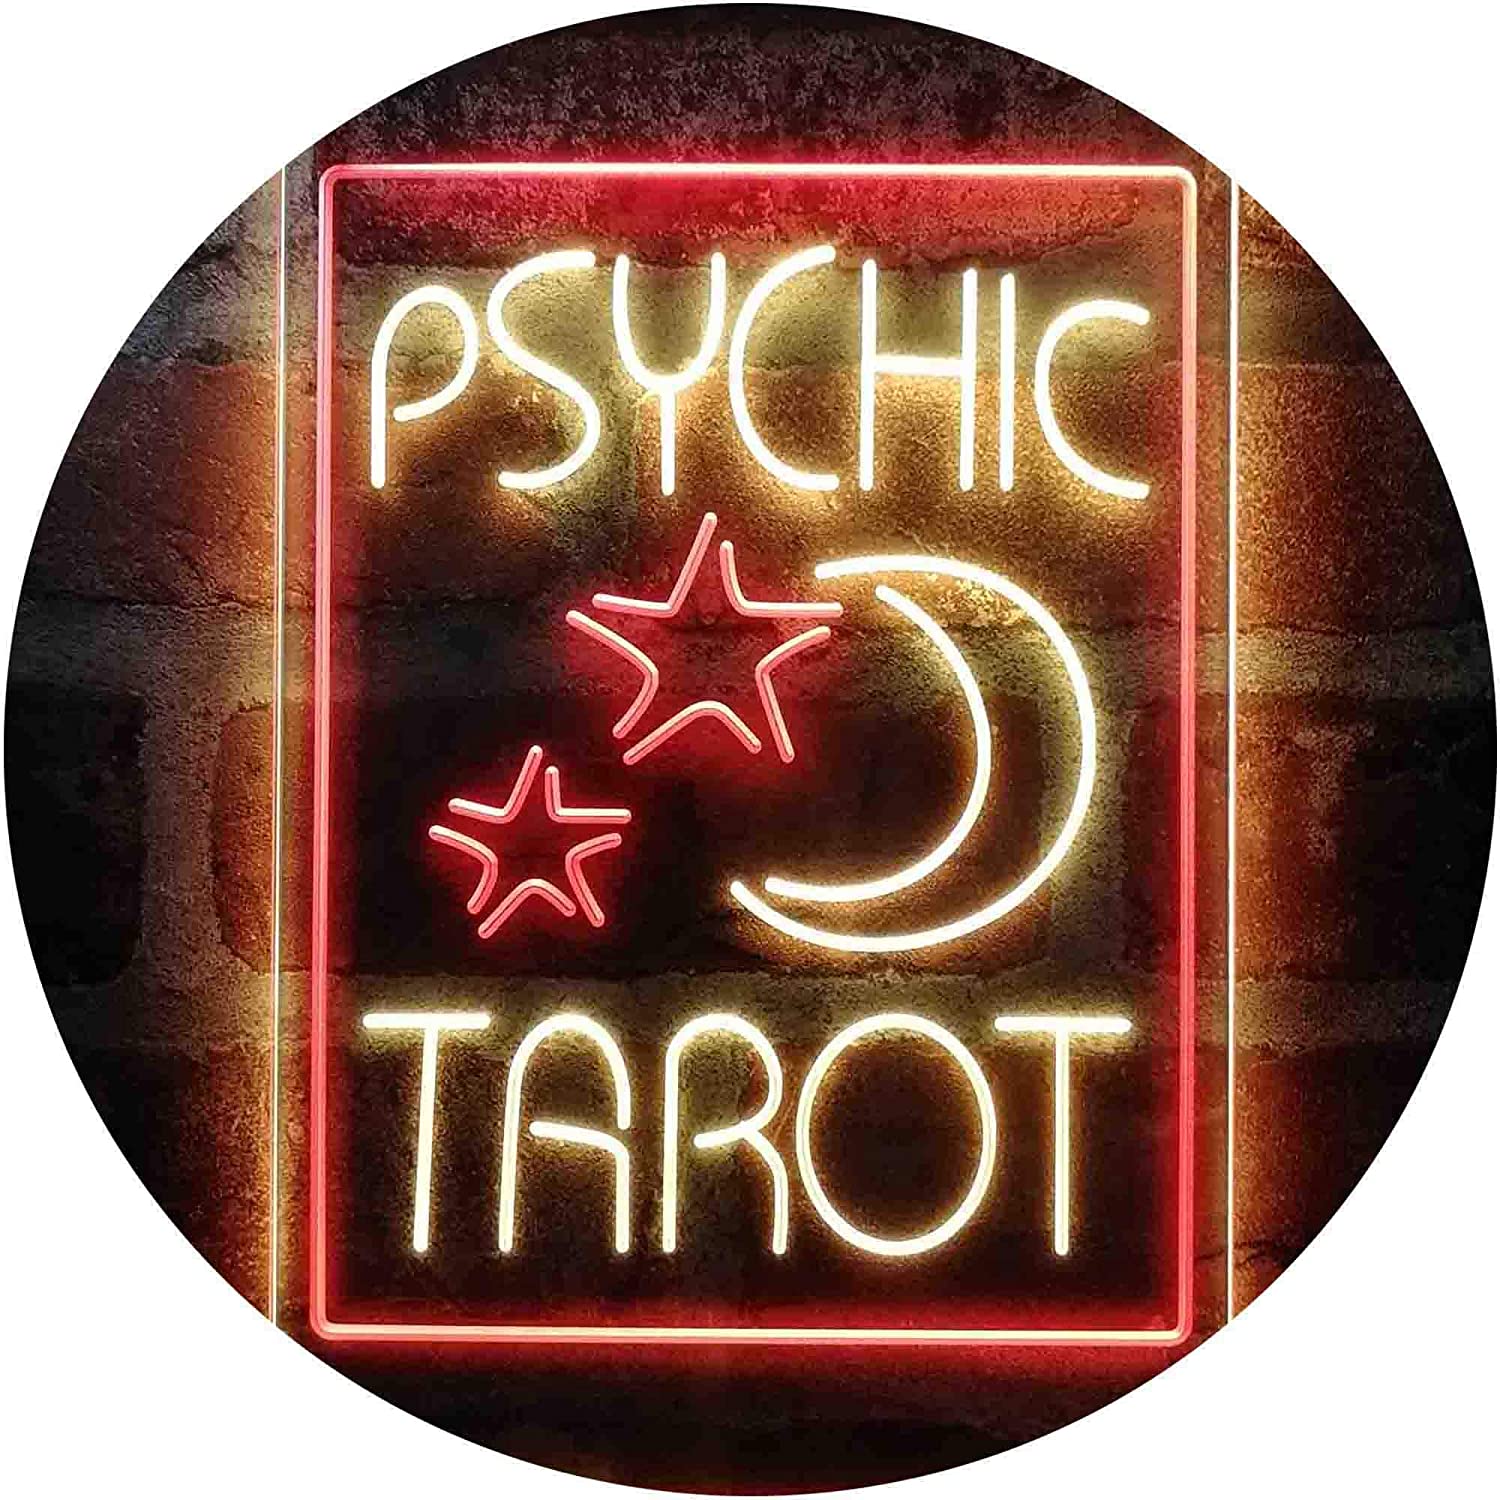 Psychic Tarot Reader Moon Stars LED Neon Light Sign - Way Up Gifts